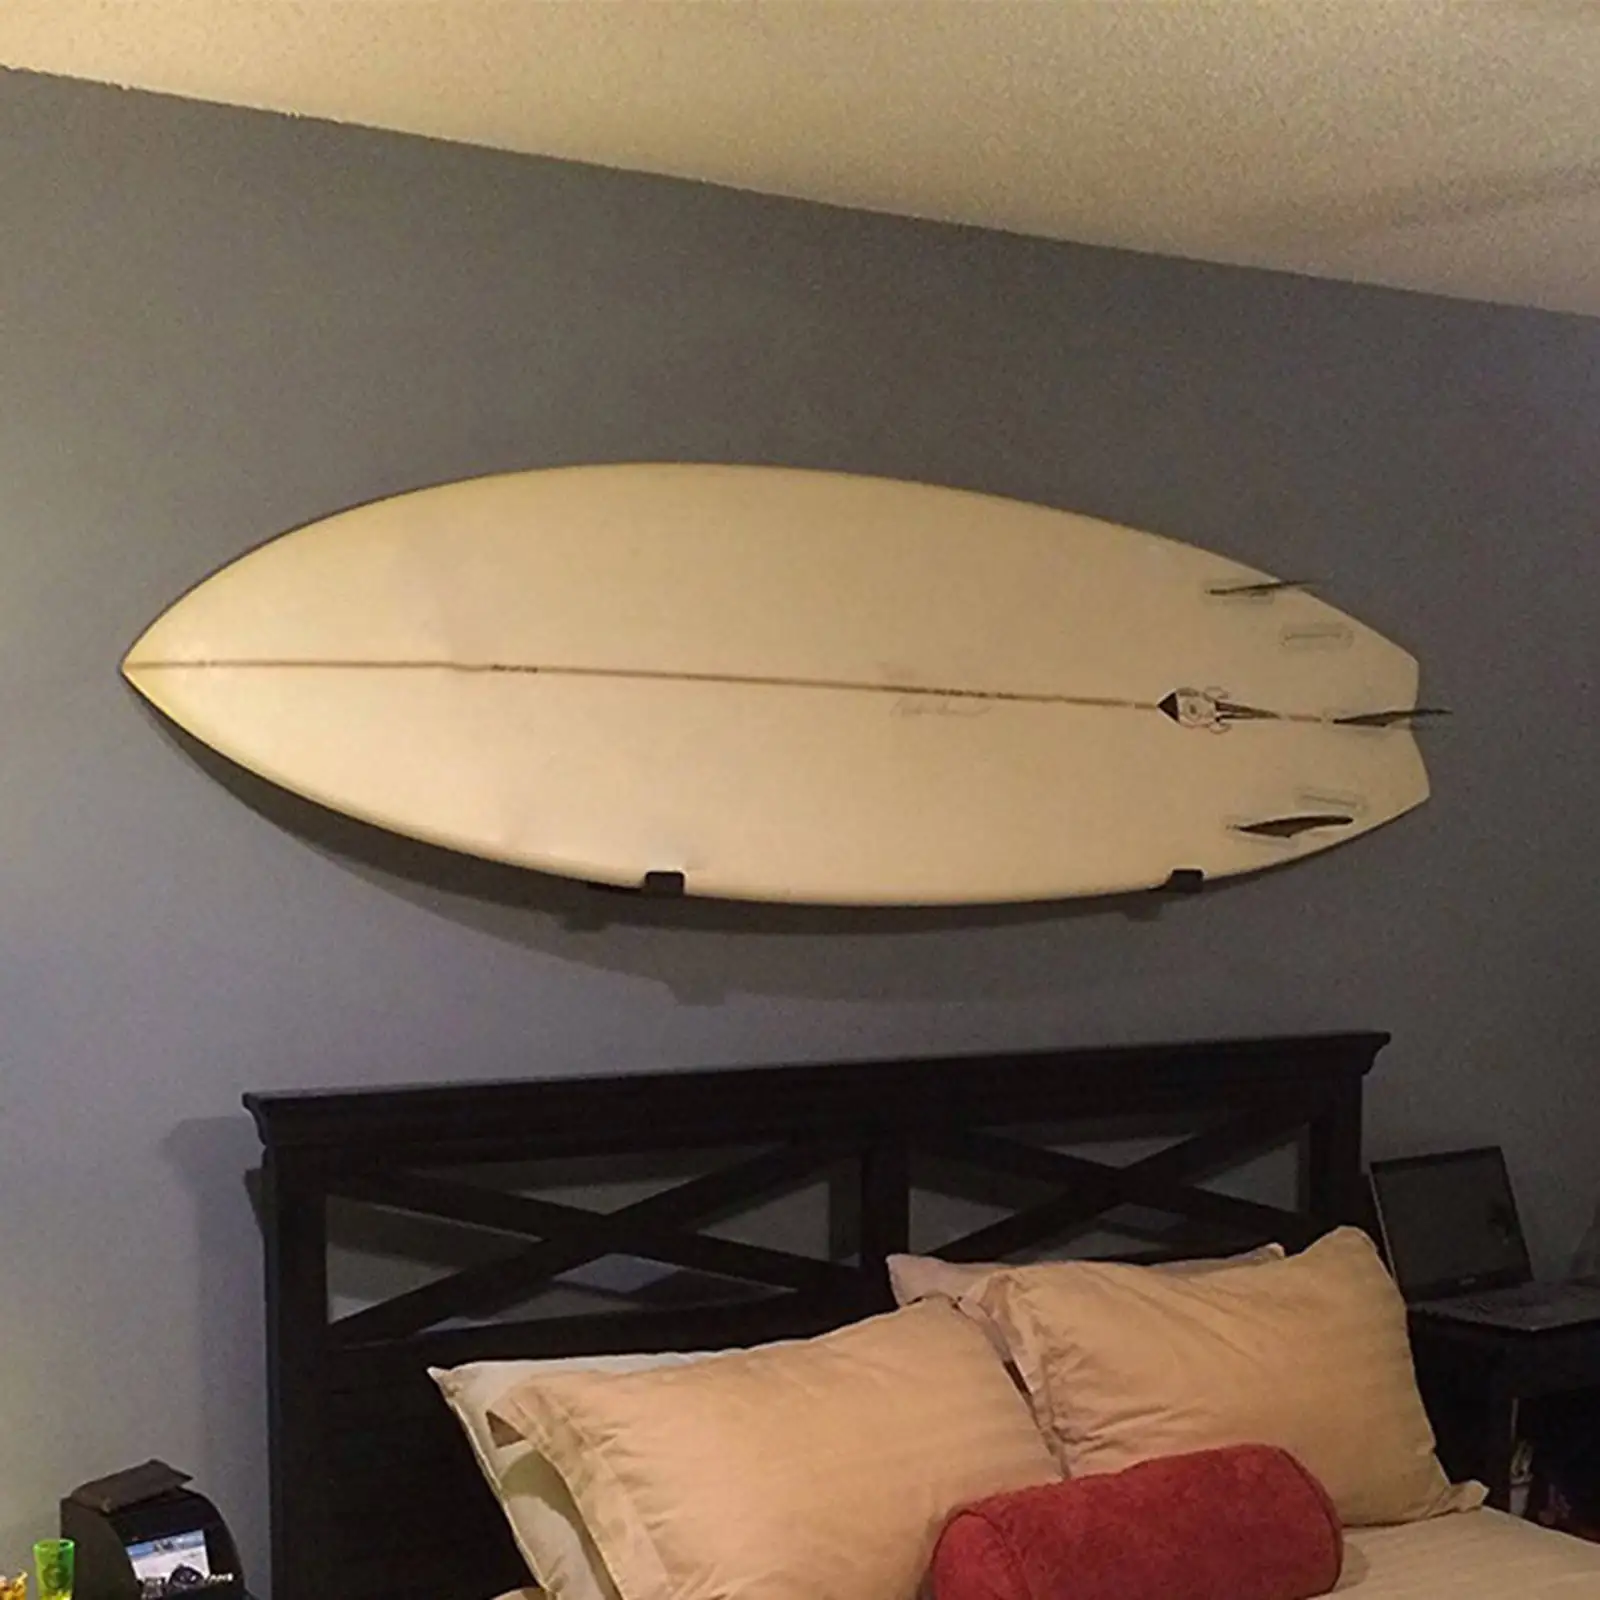 rack de parede surfboard shortboards cabide peças ferramentas armazenamento titular expositor para banheiro